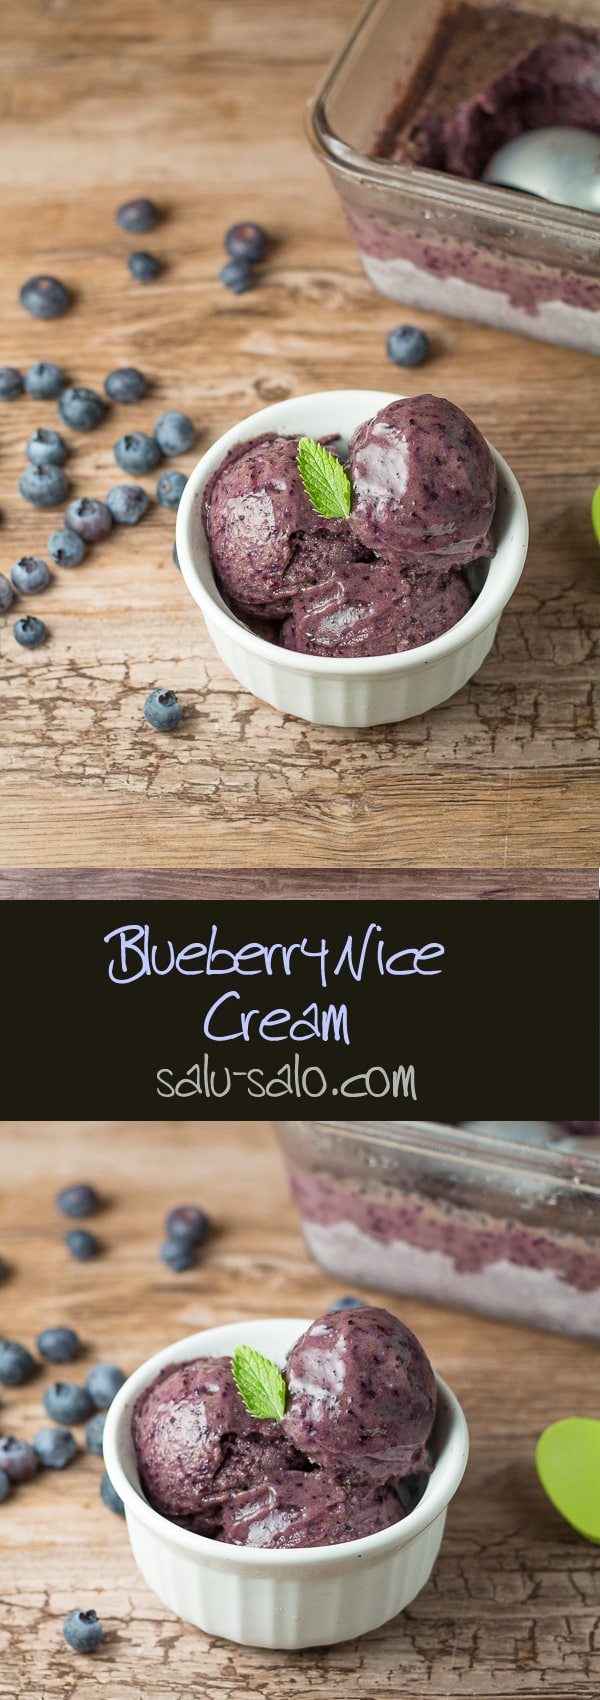 Blueberry Nice Cream